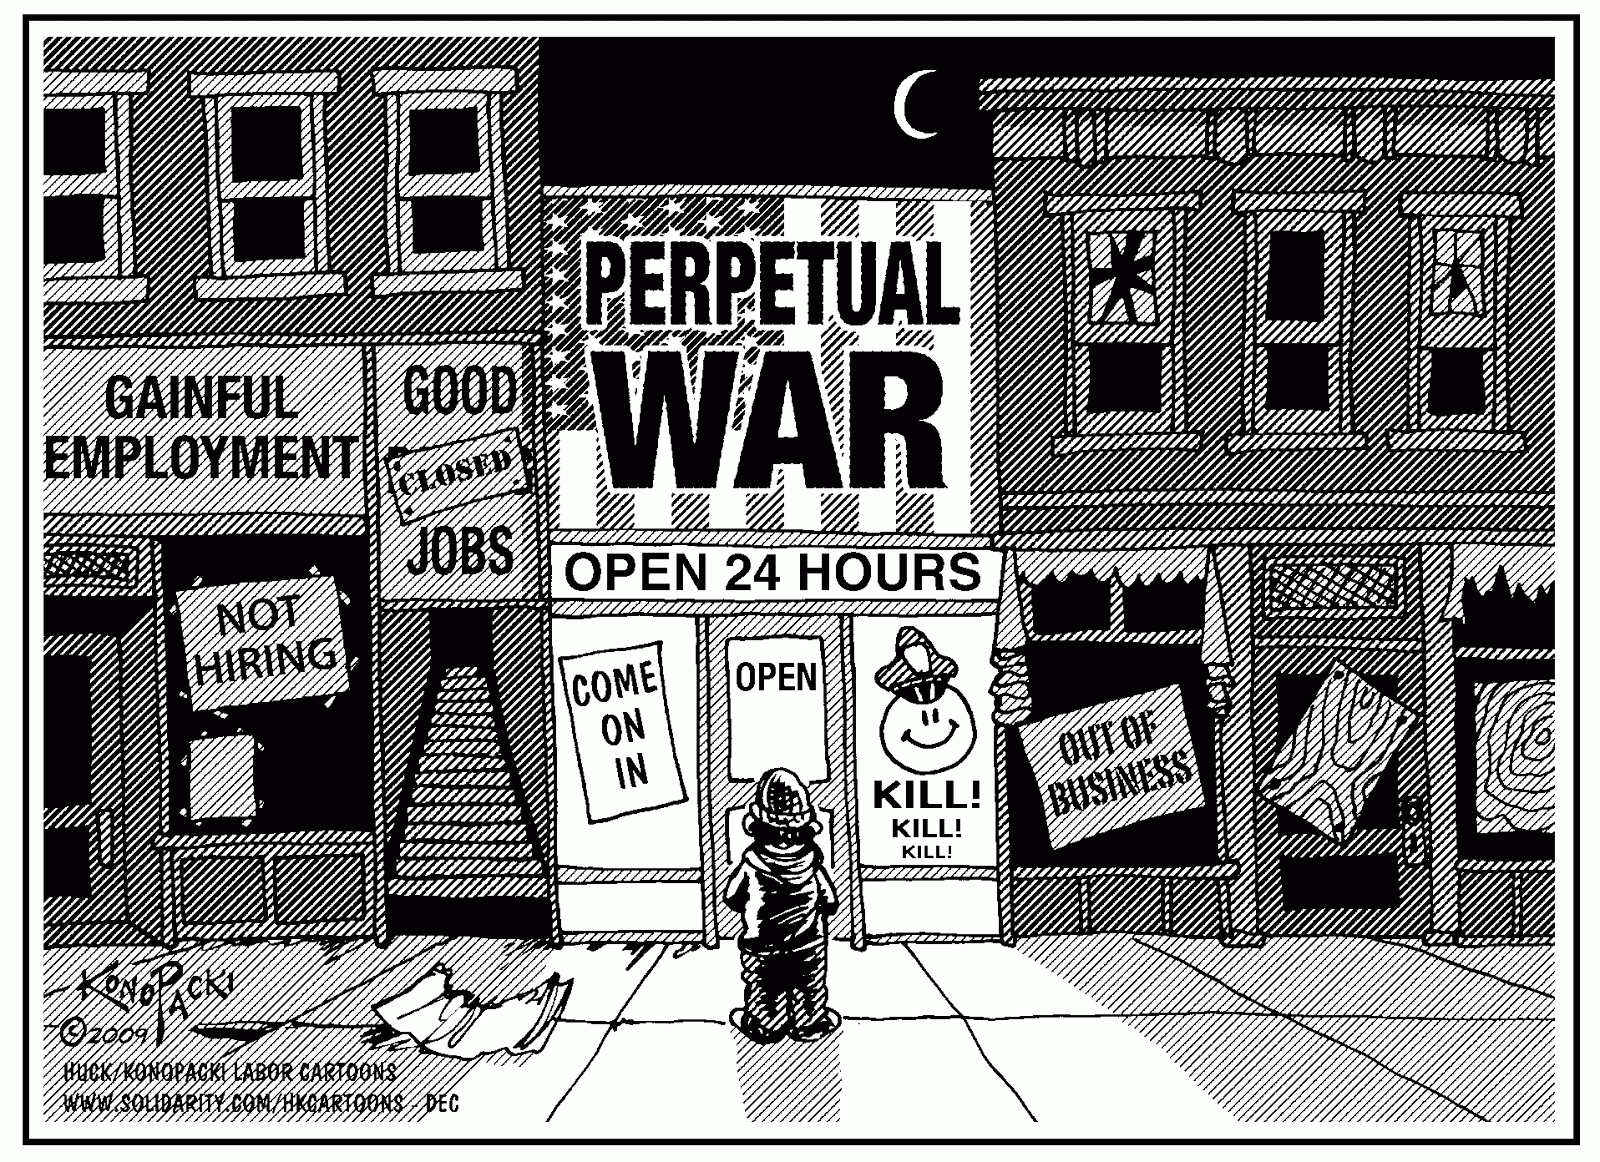 USA perpetual war